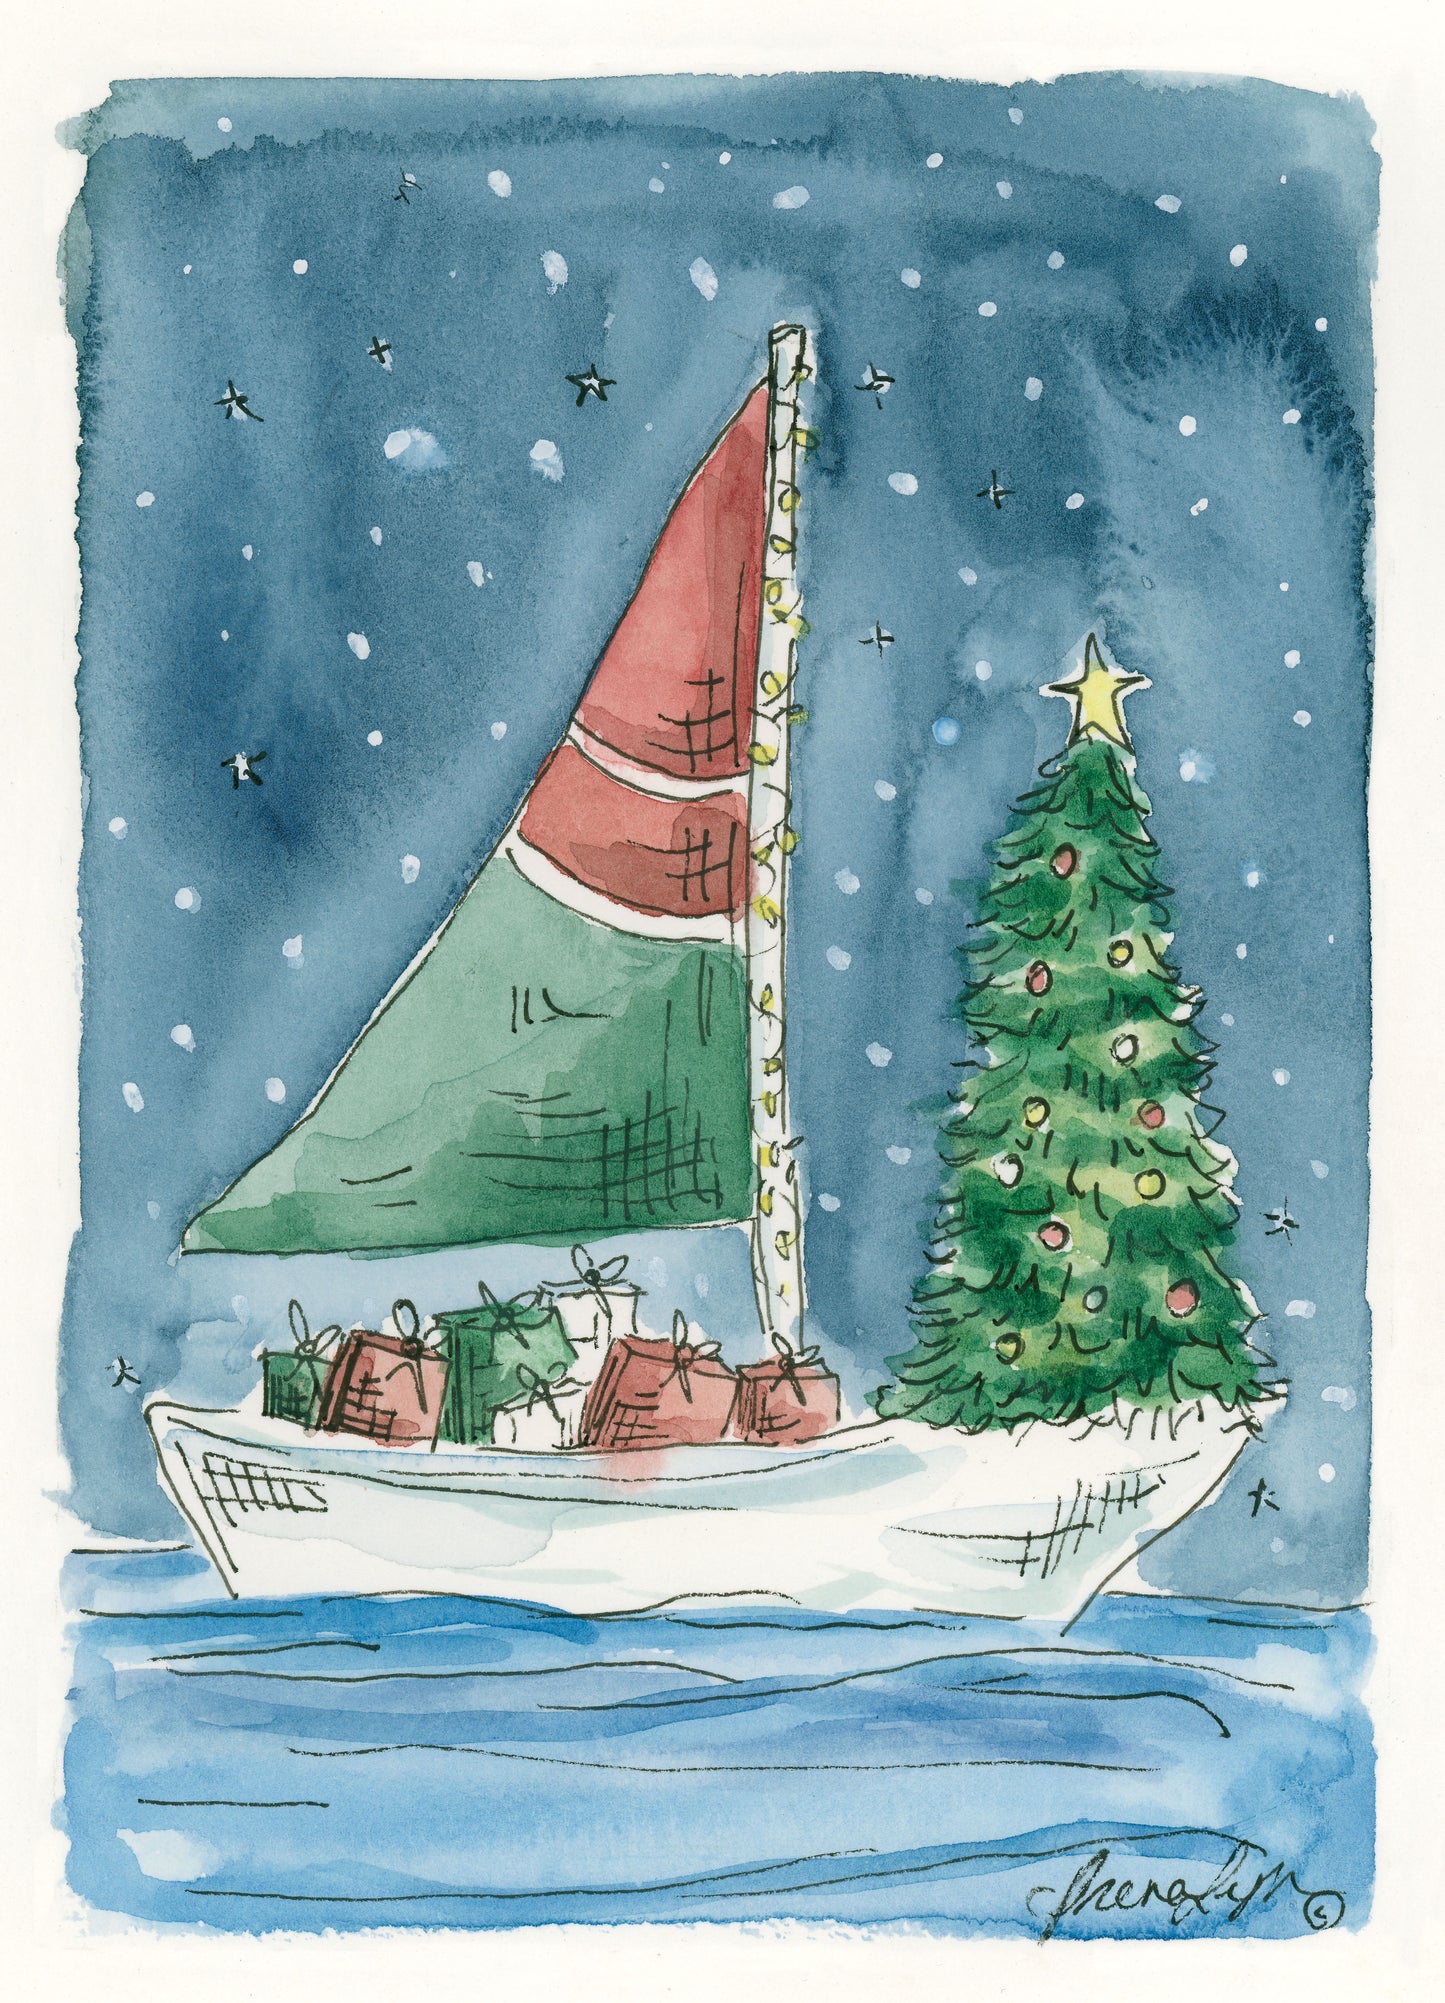 "On Cape Cod, Santa Uses Boats"